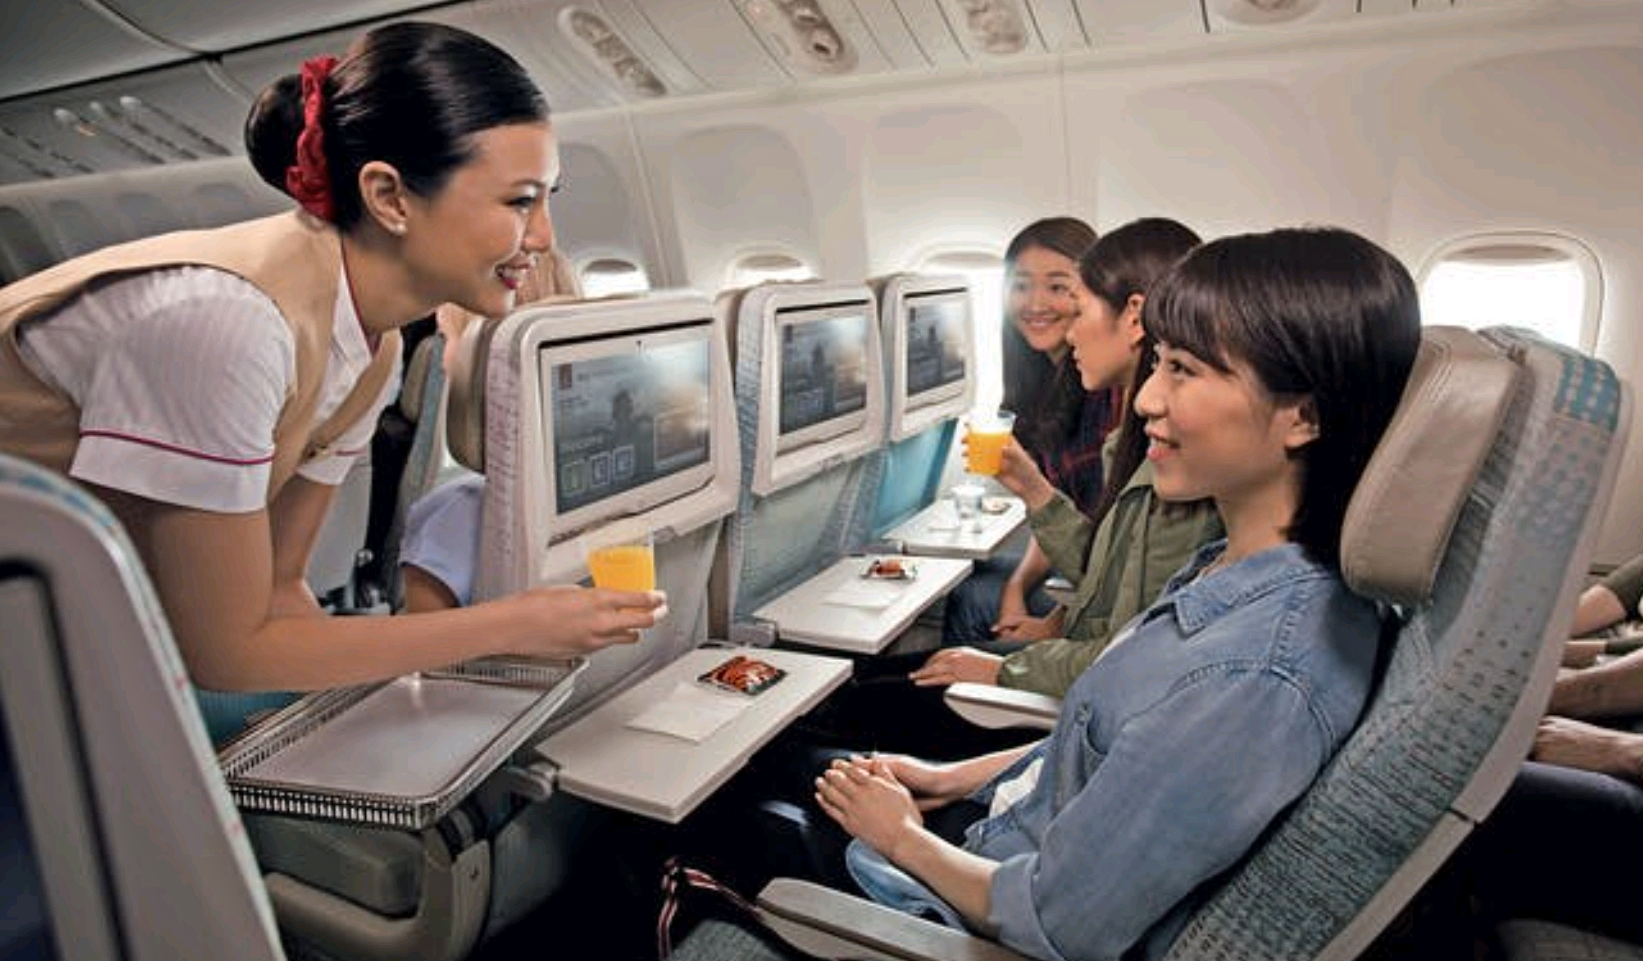 Emirates Economy Class Cabin